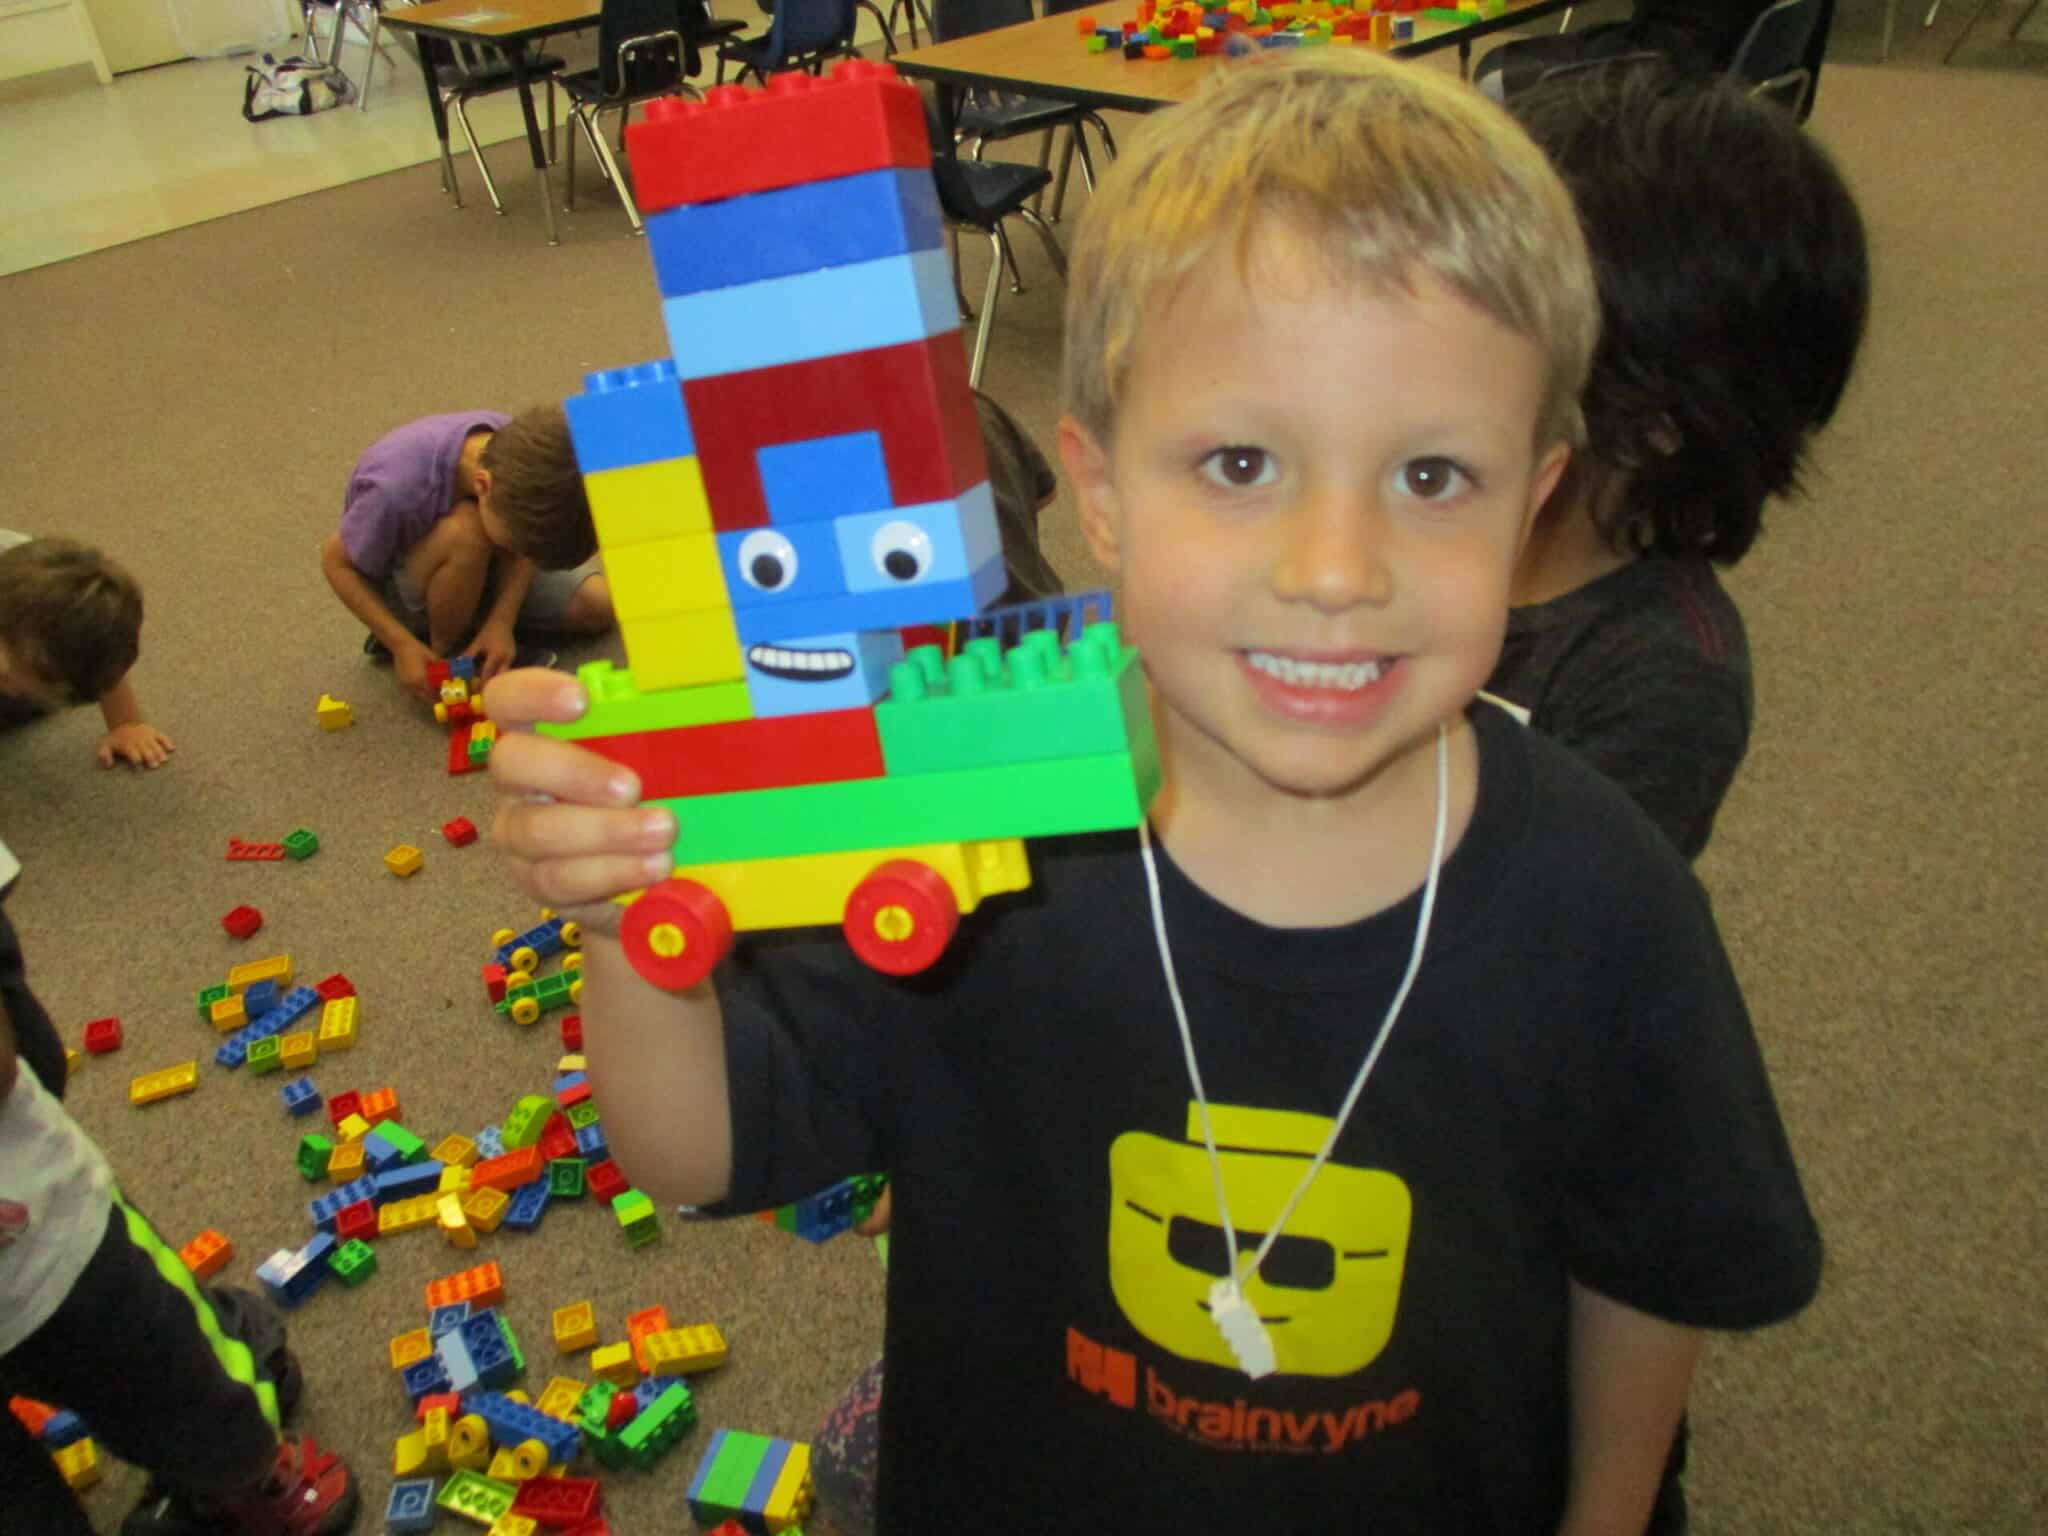 kids at brainvyne building lego